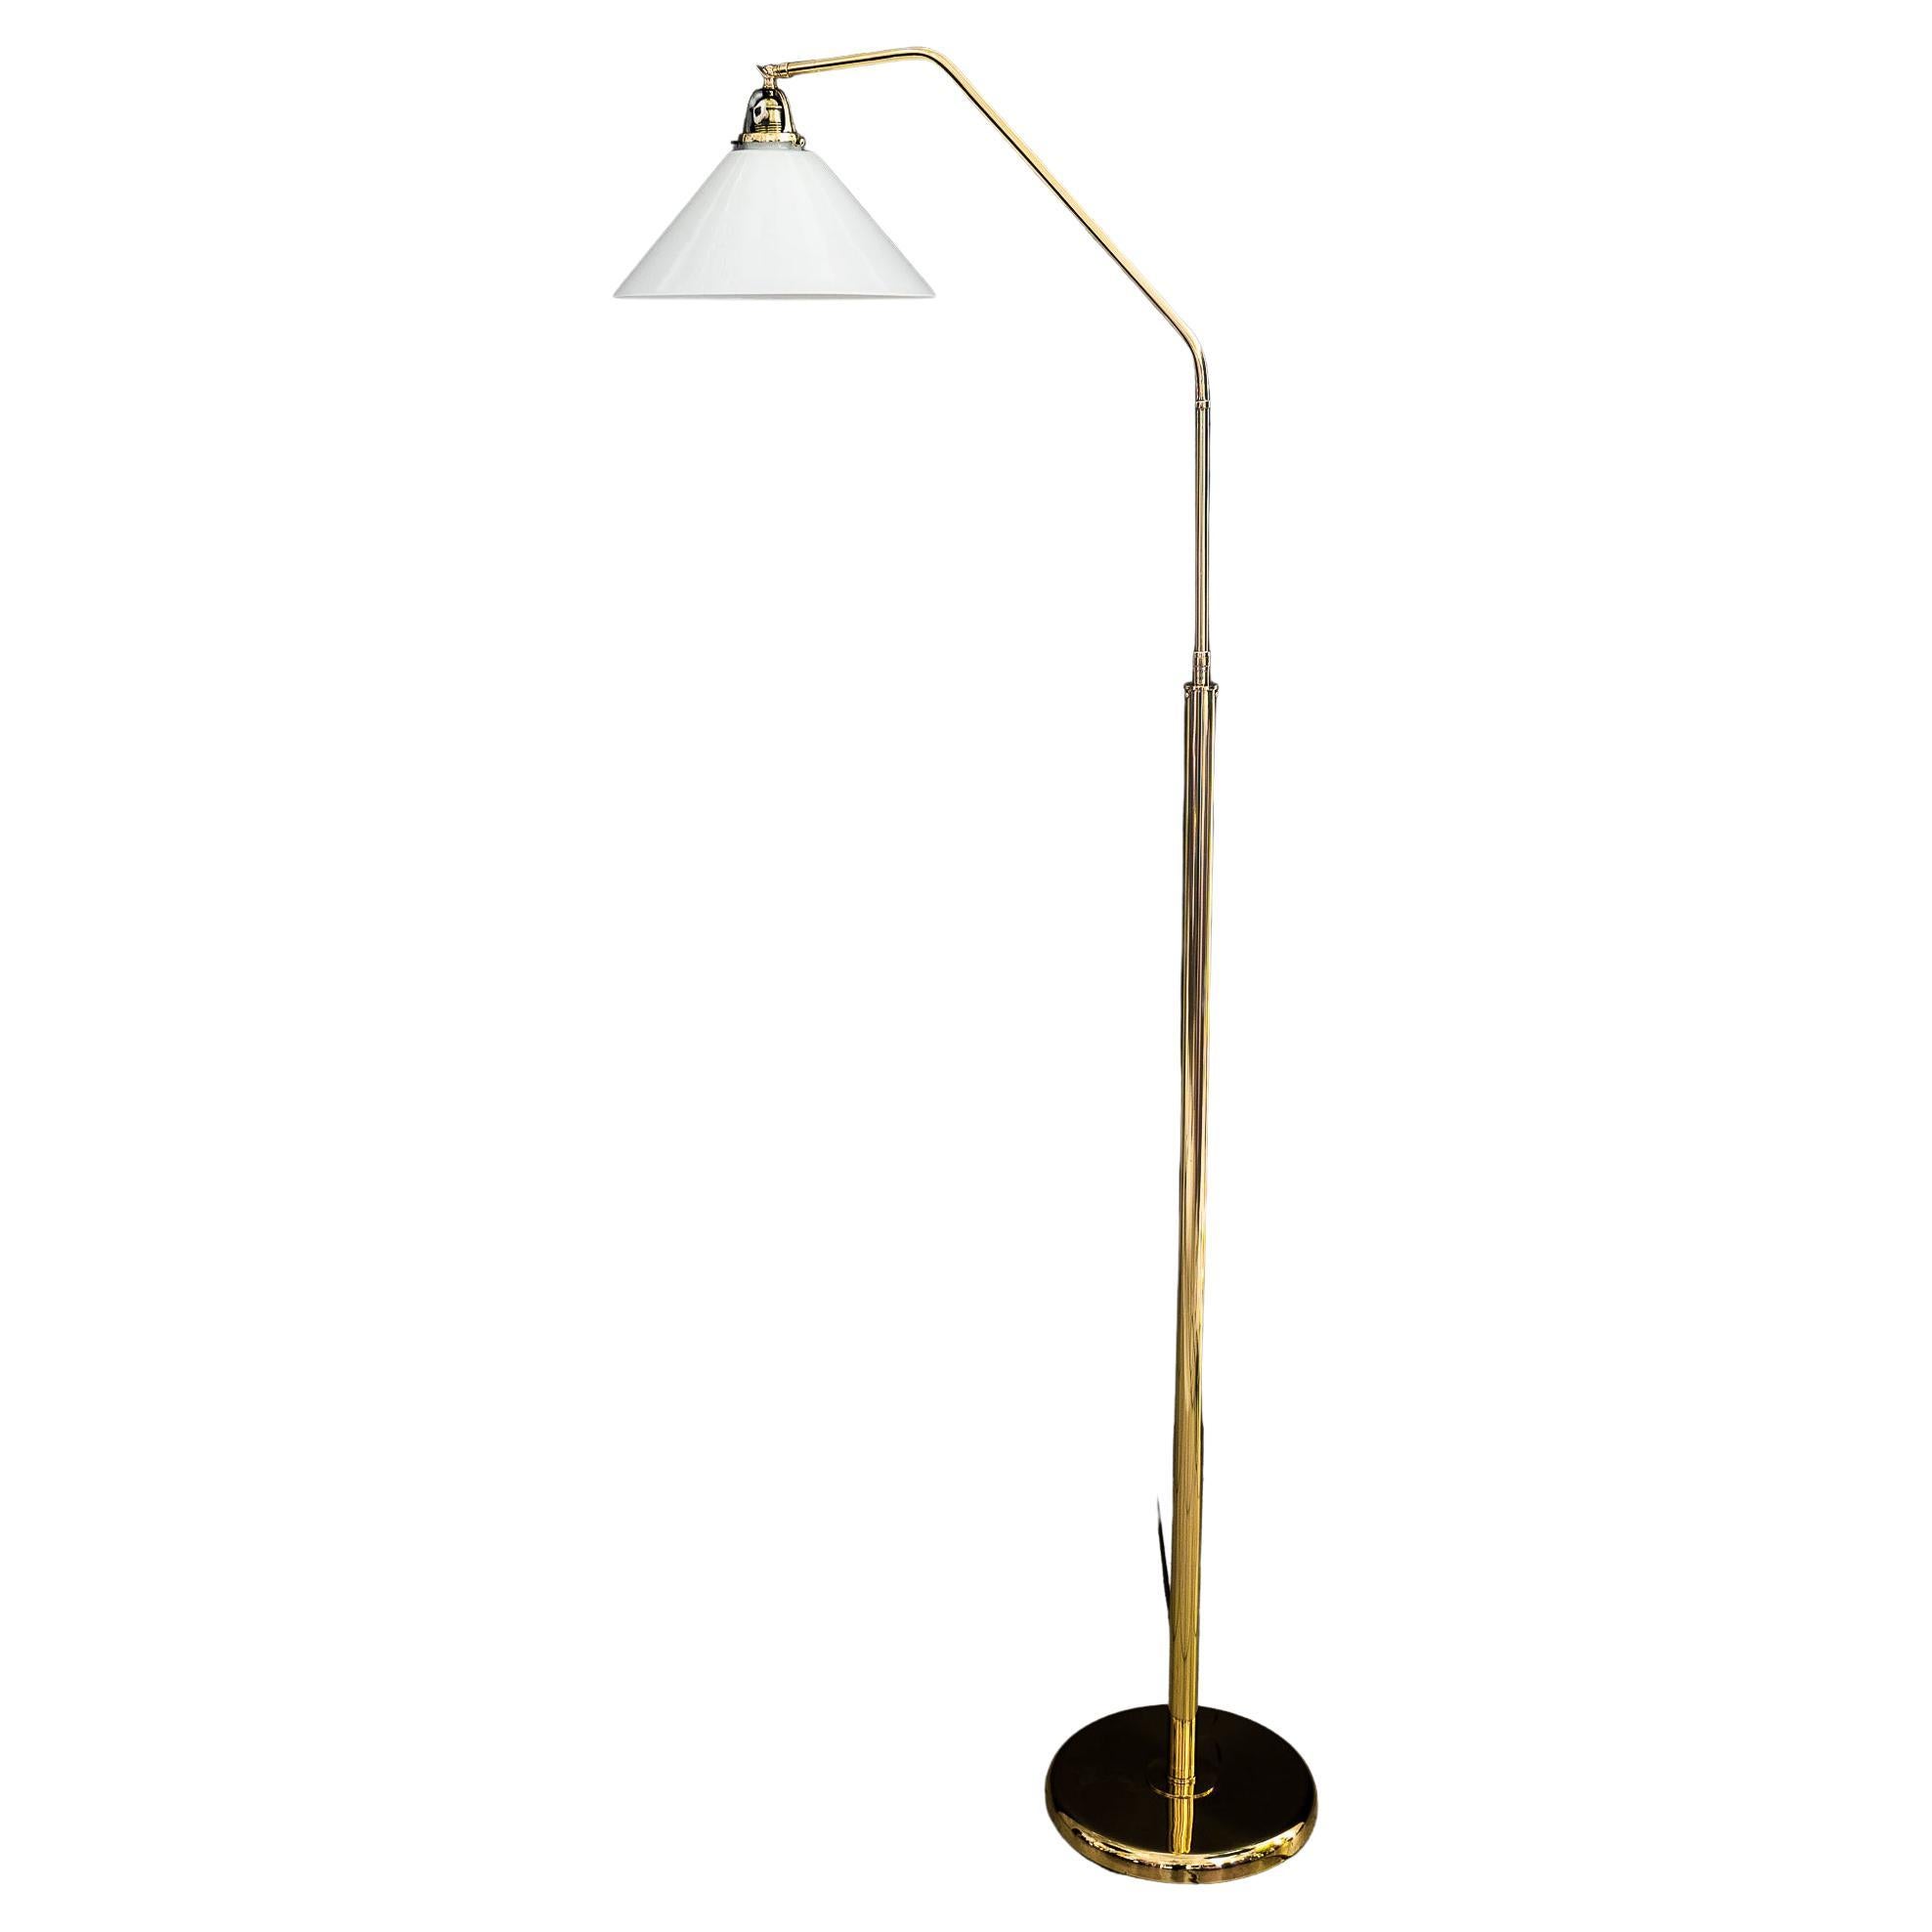 Adjustable Art Deco Floor Lamp with Glass Shade, Around 1920s